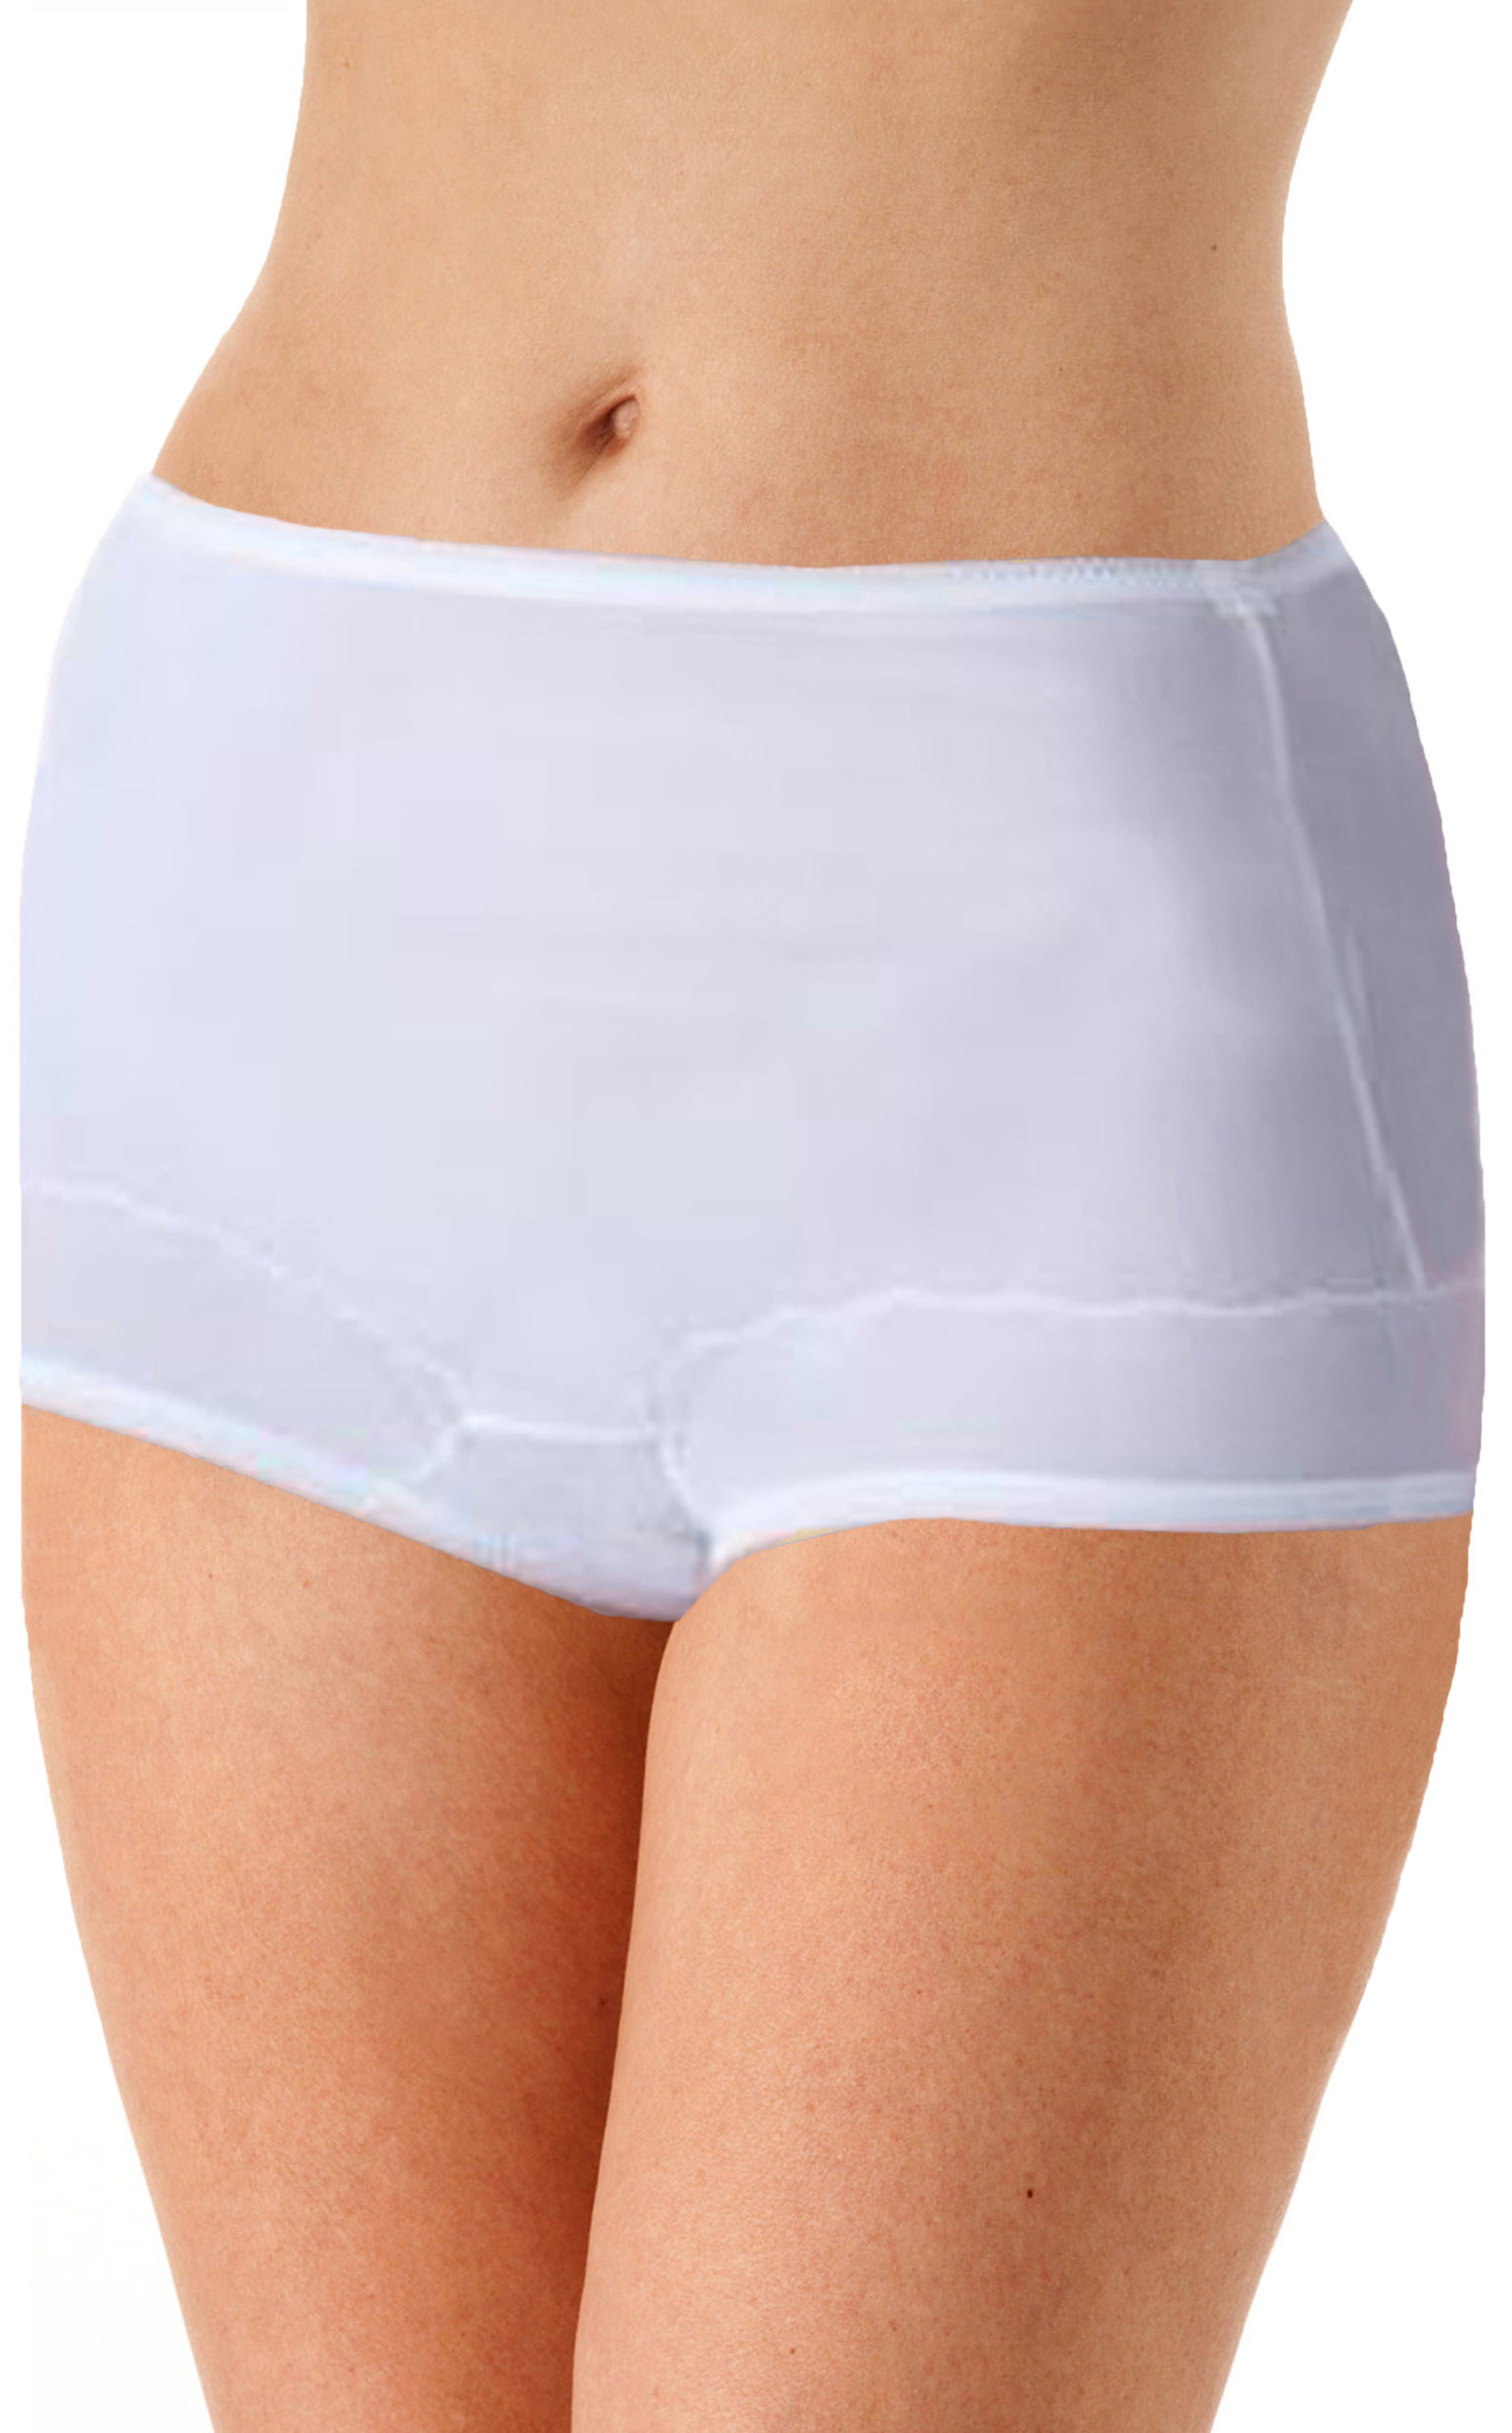 Dixie Belle Panty Women's Underwear Nylon Brief Full Coverage No Ride 3  Pack